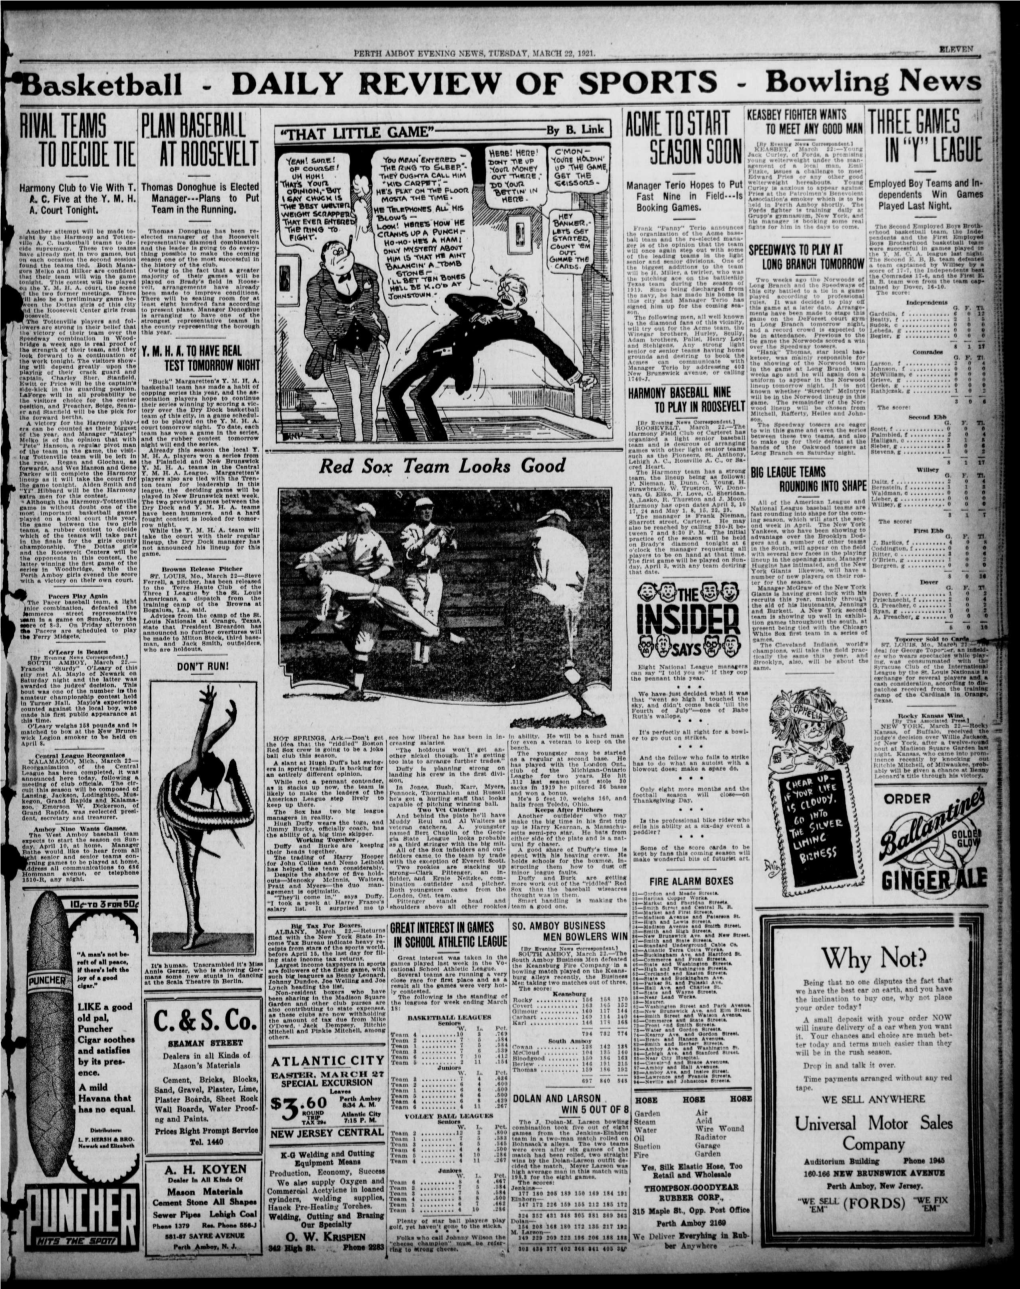 Perth Amboy Evening News (Perth Amboy, N.J.). 1921-03-22 [P 11]